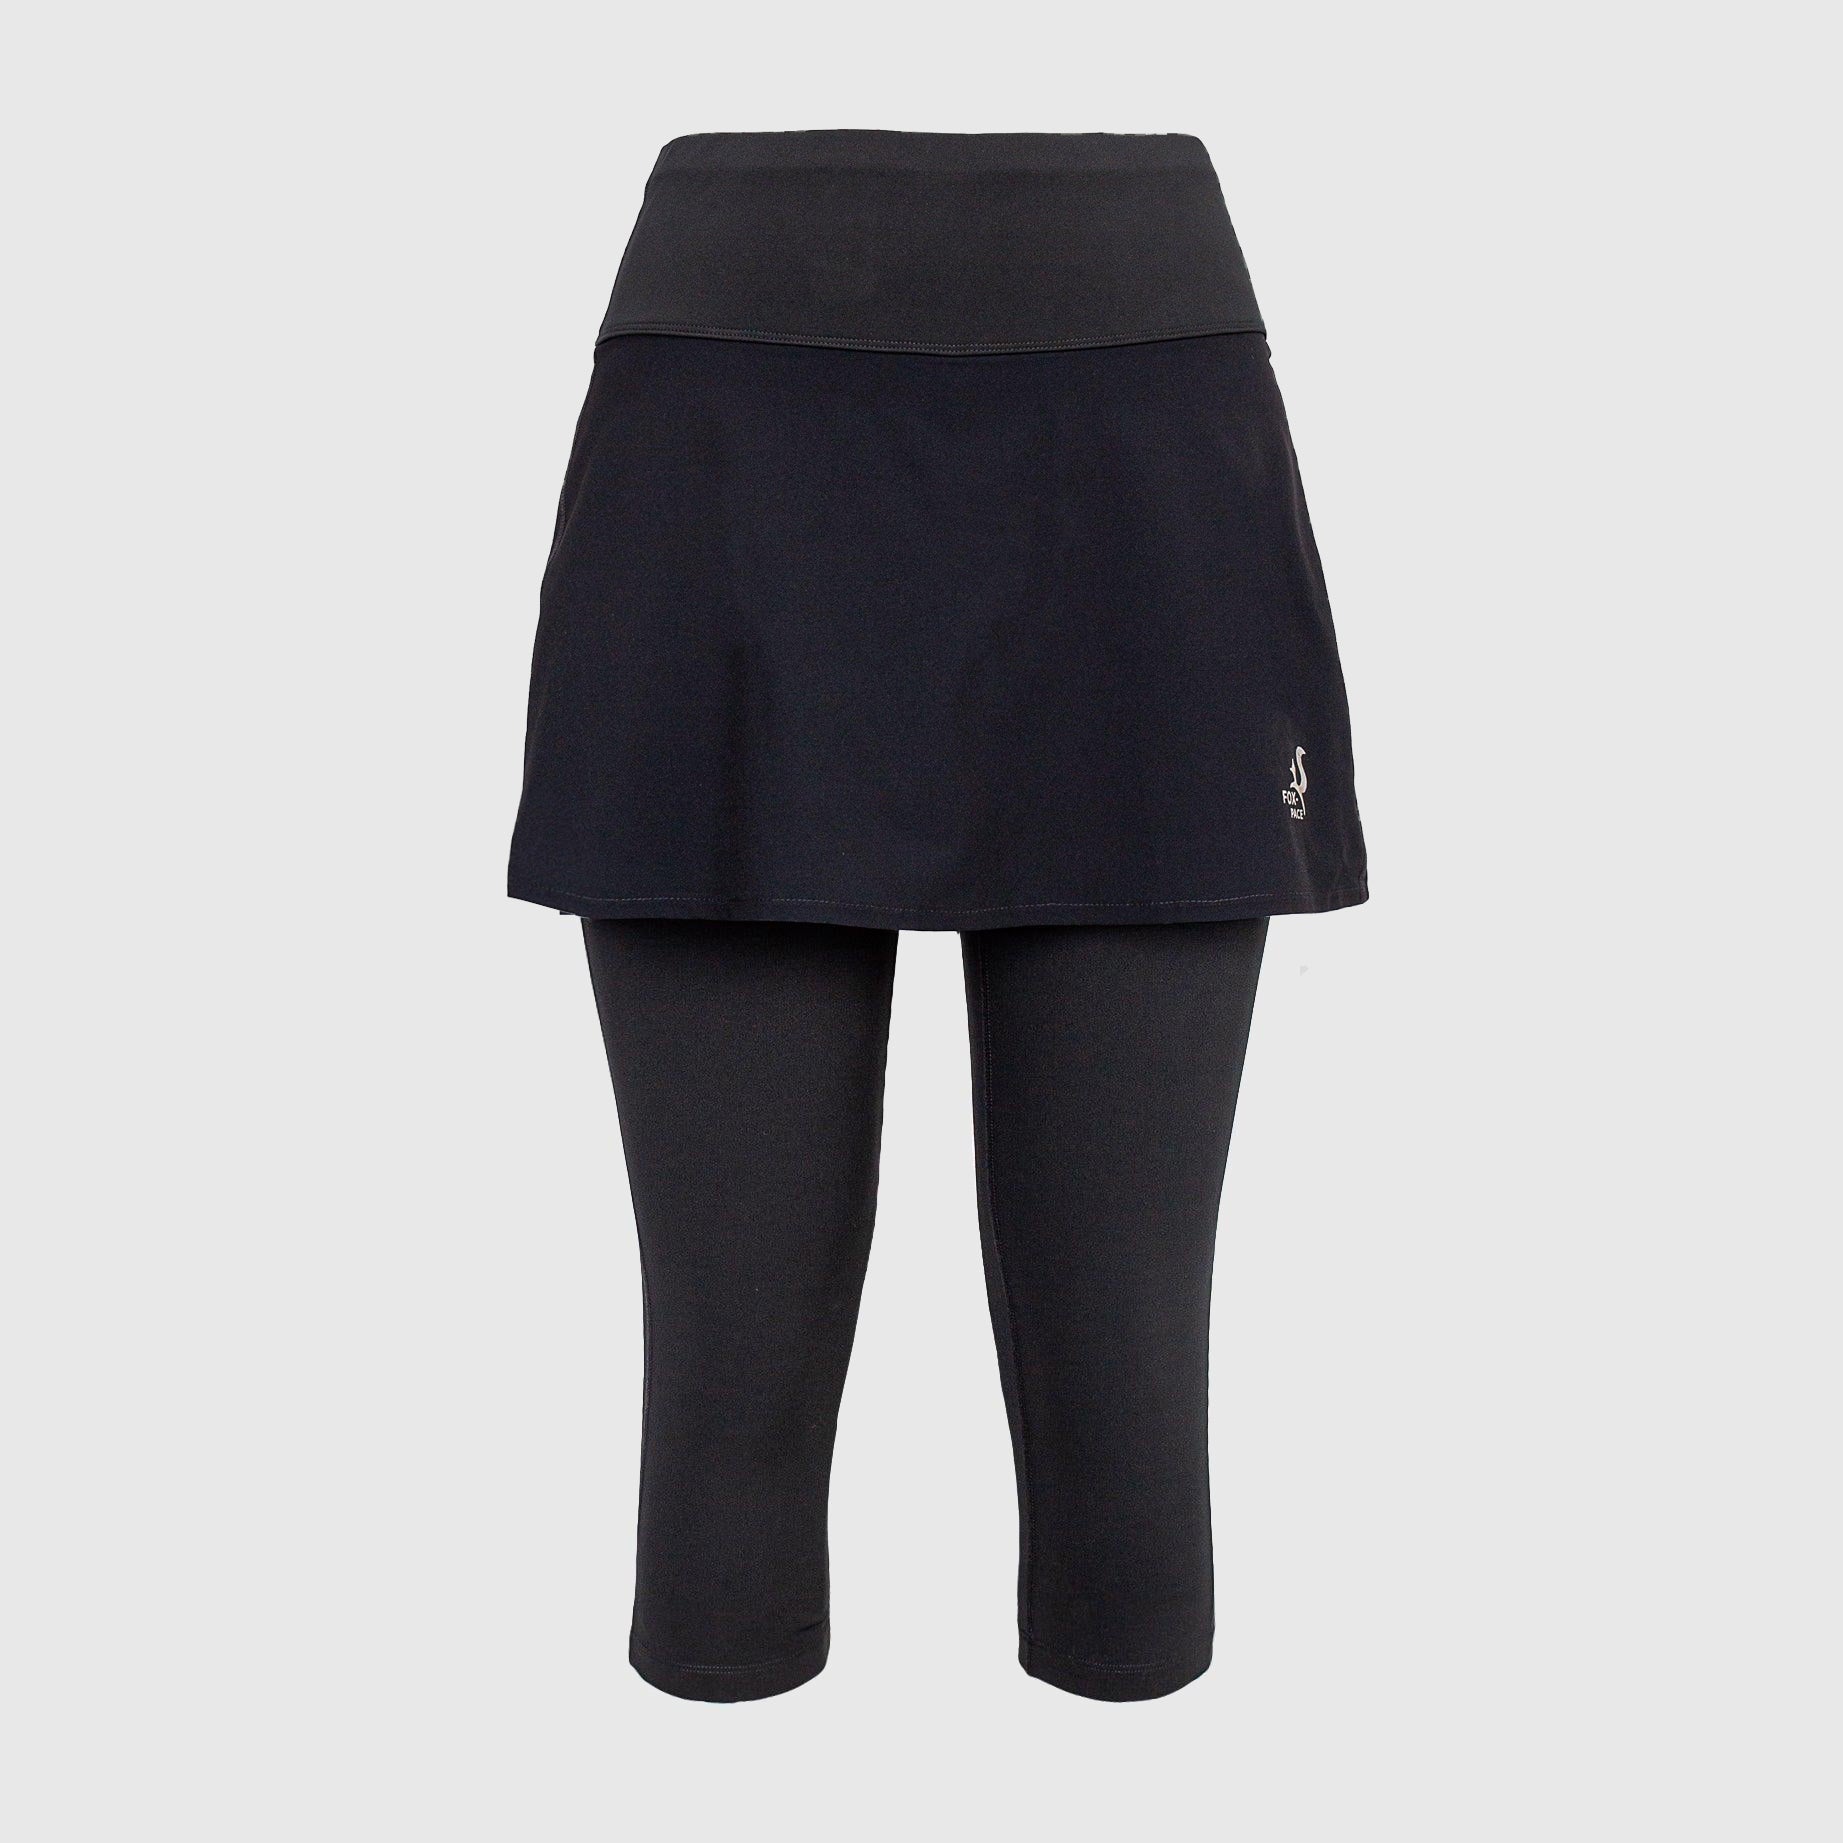 Skirt Sports Lotta Breeze Capri Skirt, Holiday Print/Black, Large